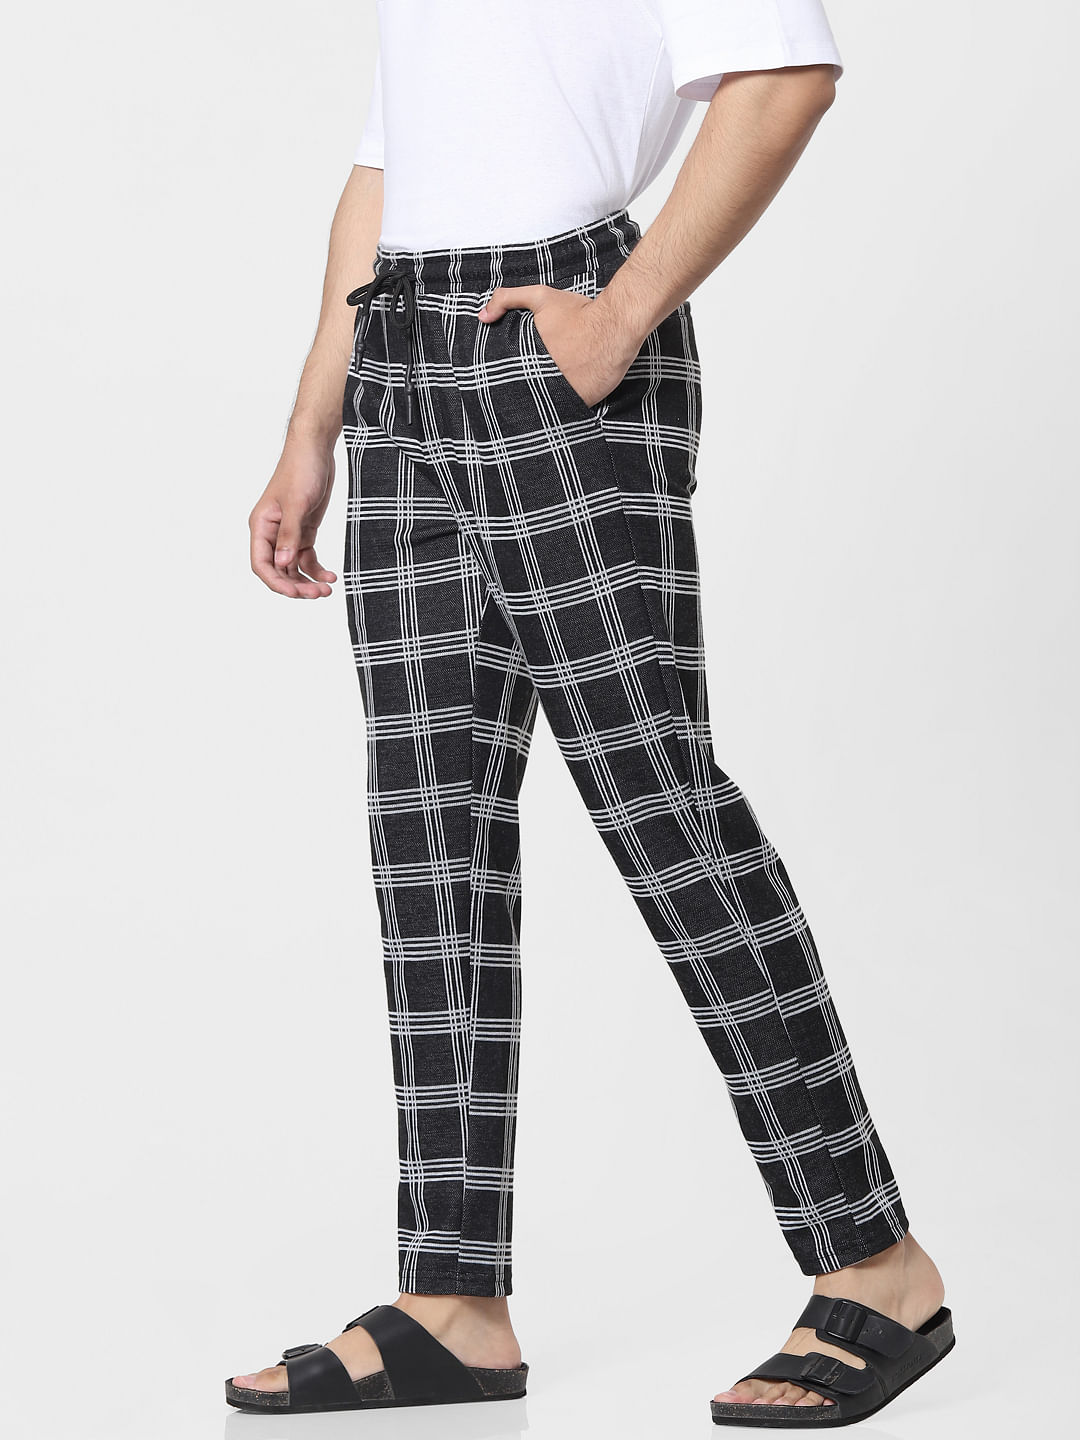 Buy Grey  Black Trousers  Pants for Women by Fig Online  Ajiocom